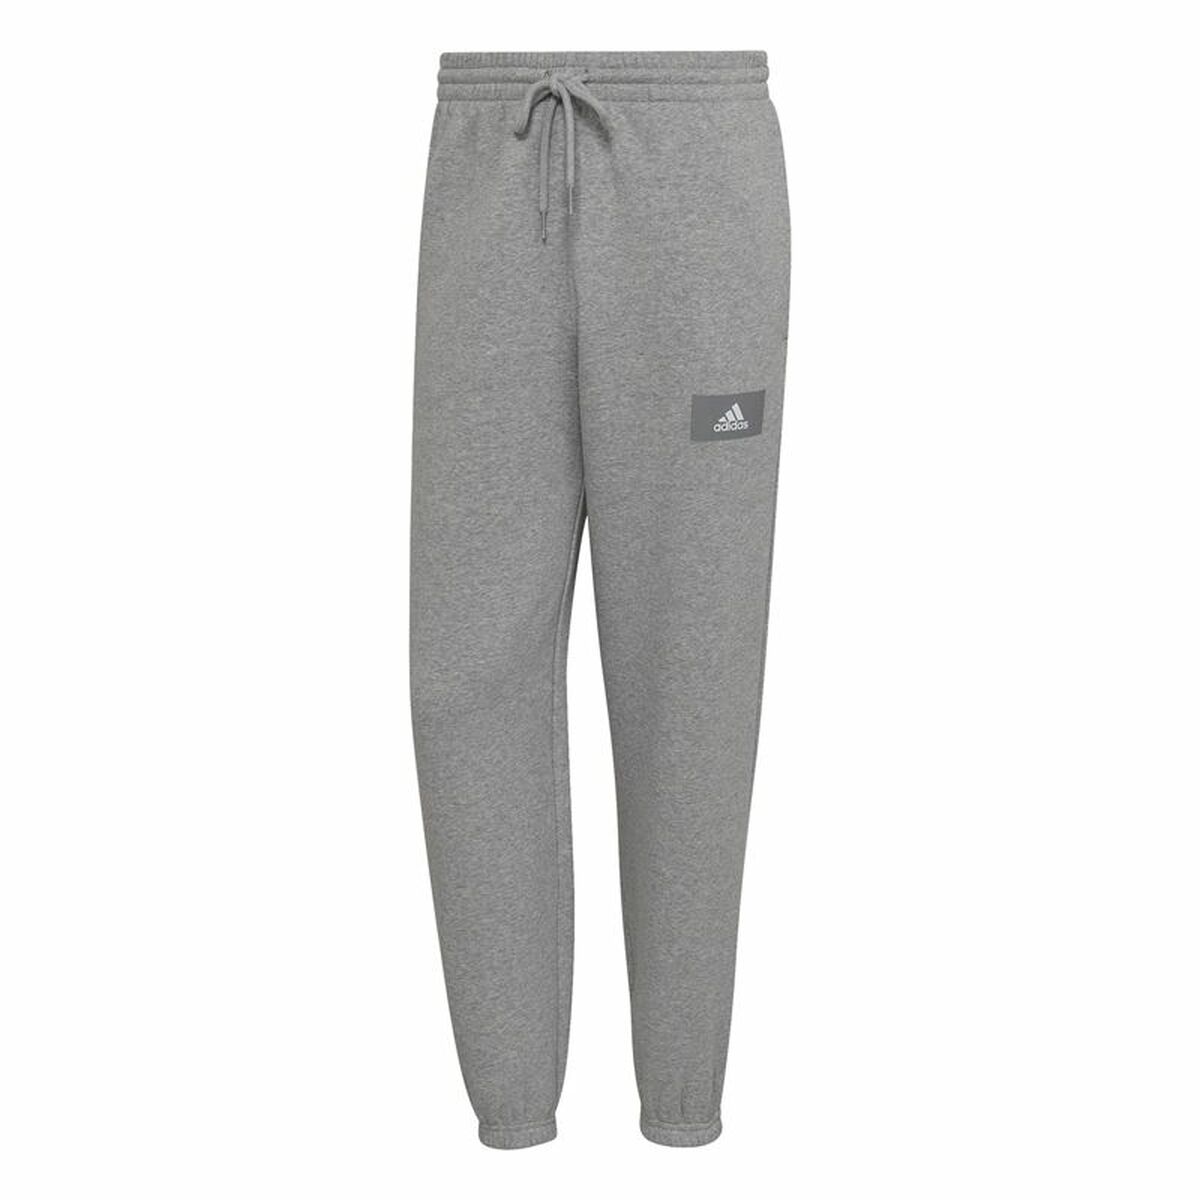 Pantaloni pentru Adulți Adidas Essentials FeelVivid Gri Bărbați - Mărime S